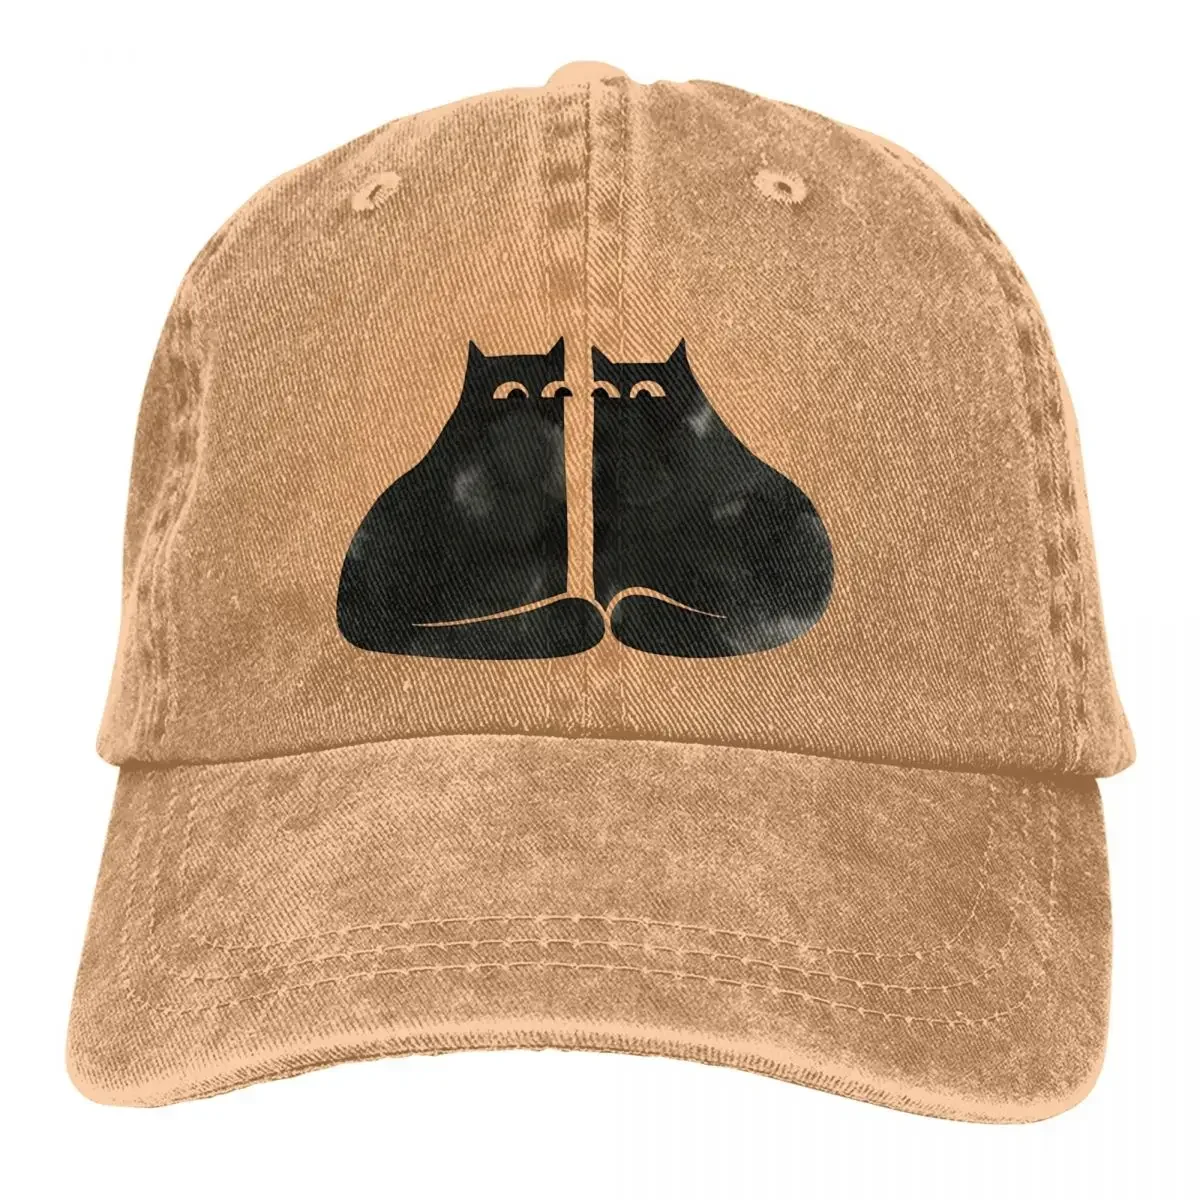 Pure Color Dad Hats Suspicious Cats Women's Hat Sun Visor Baseball Caps Animal Peaked Cap